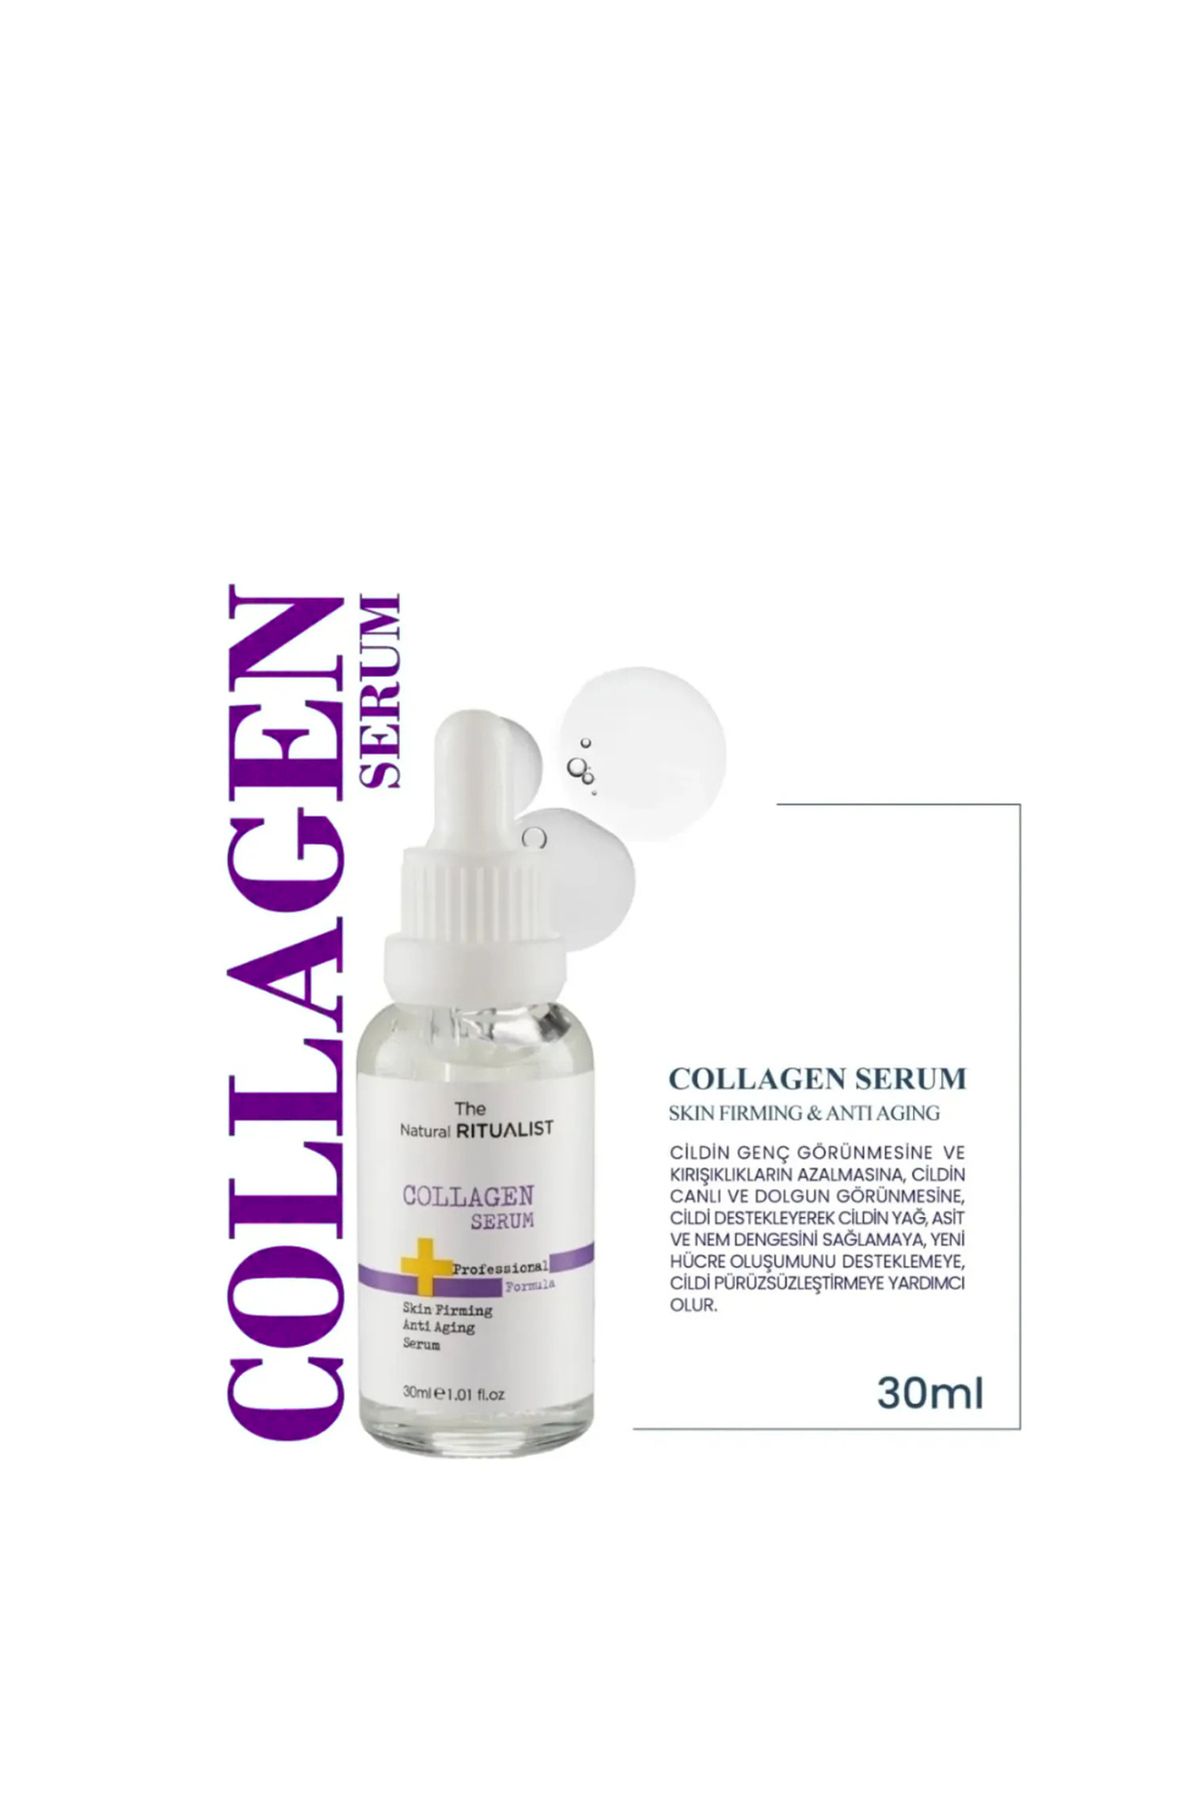 The Natural Ritualist Collagen Serum 30ml